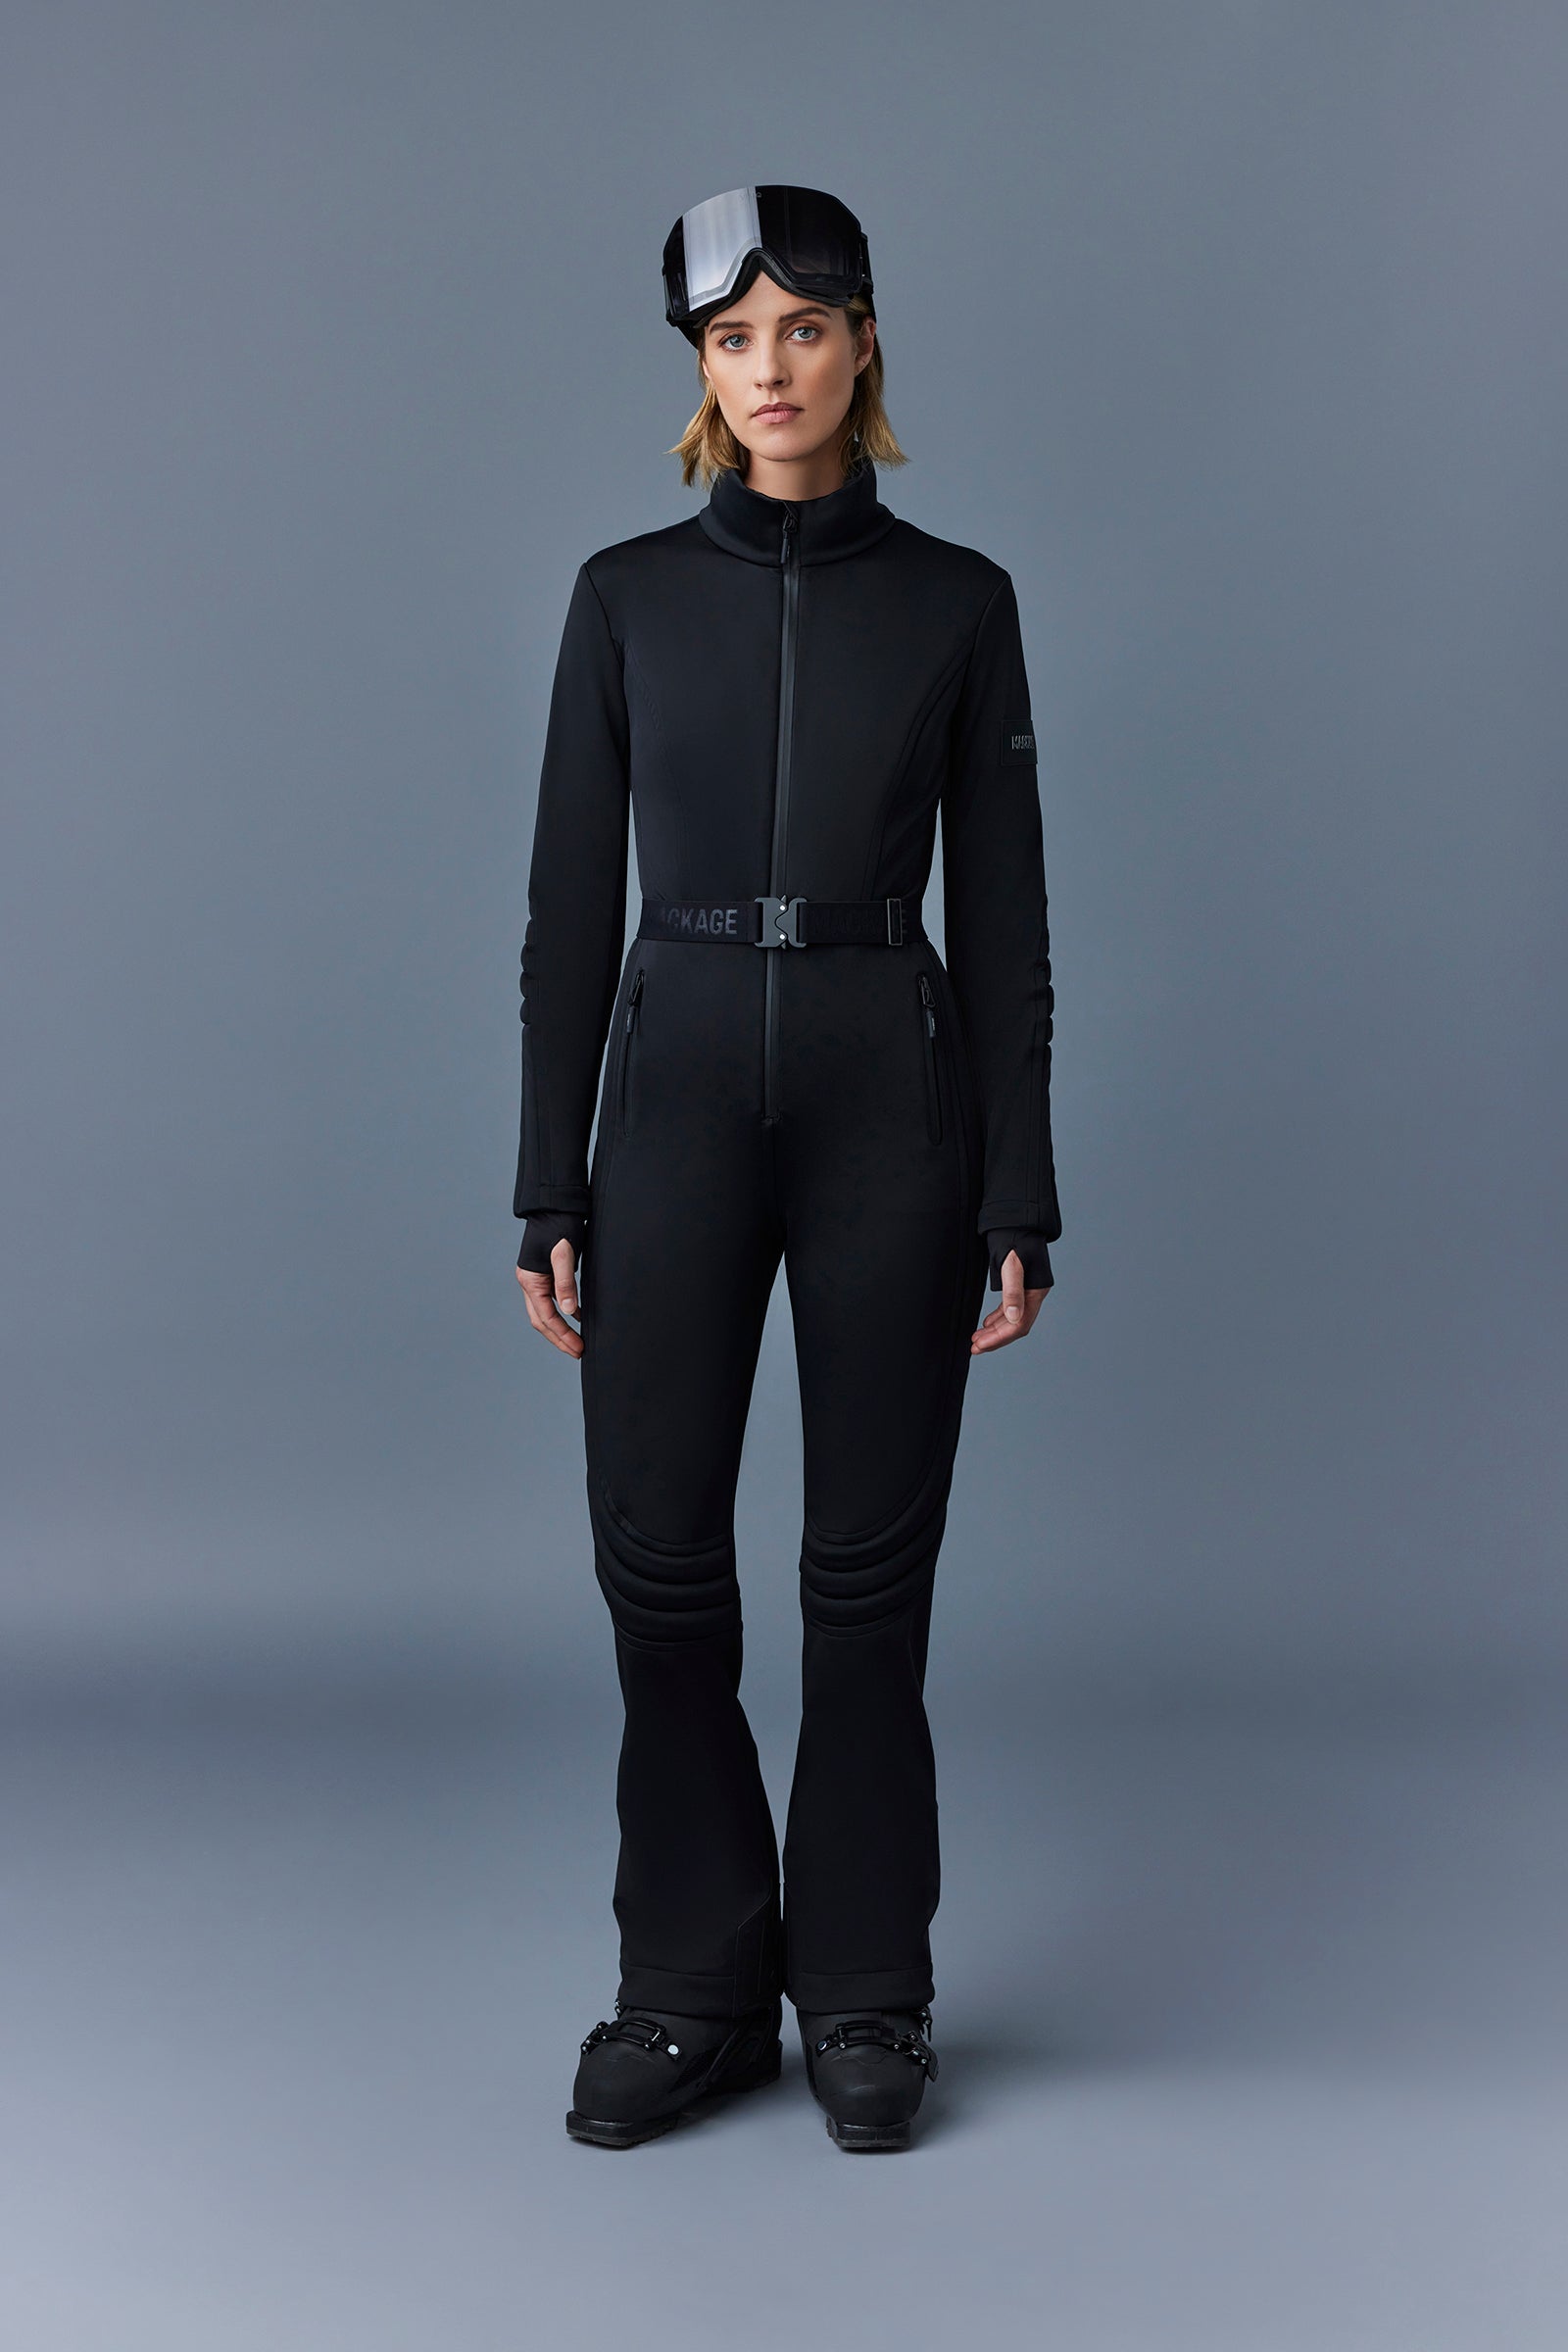 Freestyle Petite Fleece Lined Ski Suit in Black